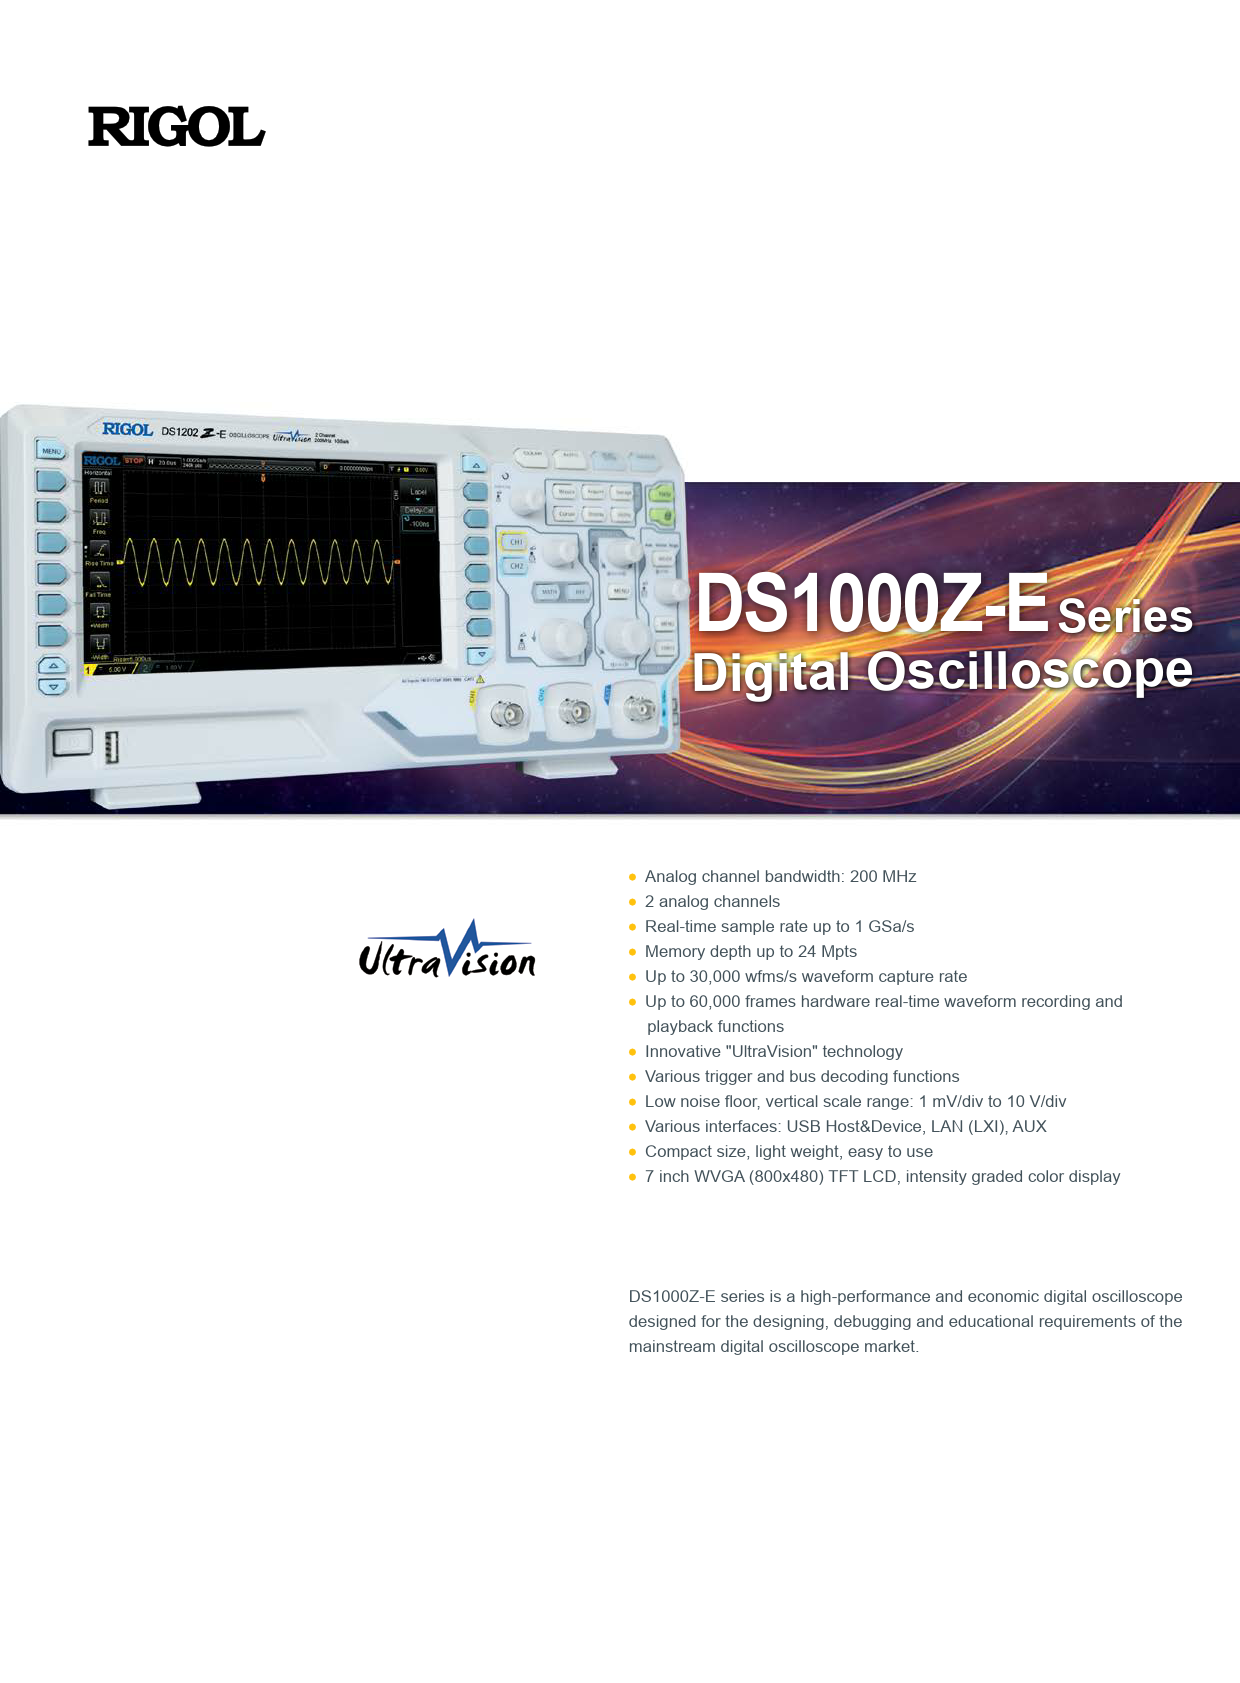 Datasheet DS1000Z-E Series Rigol